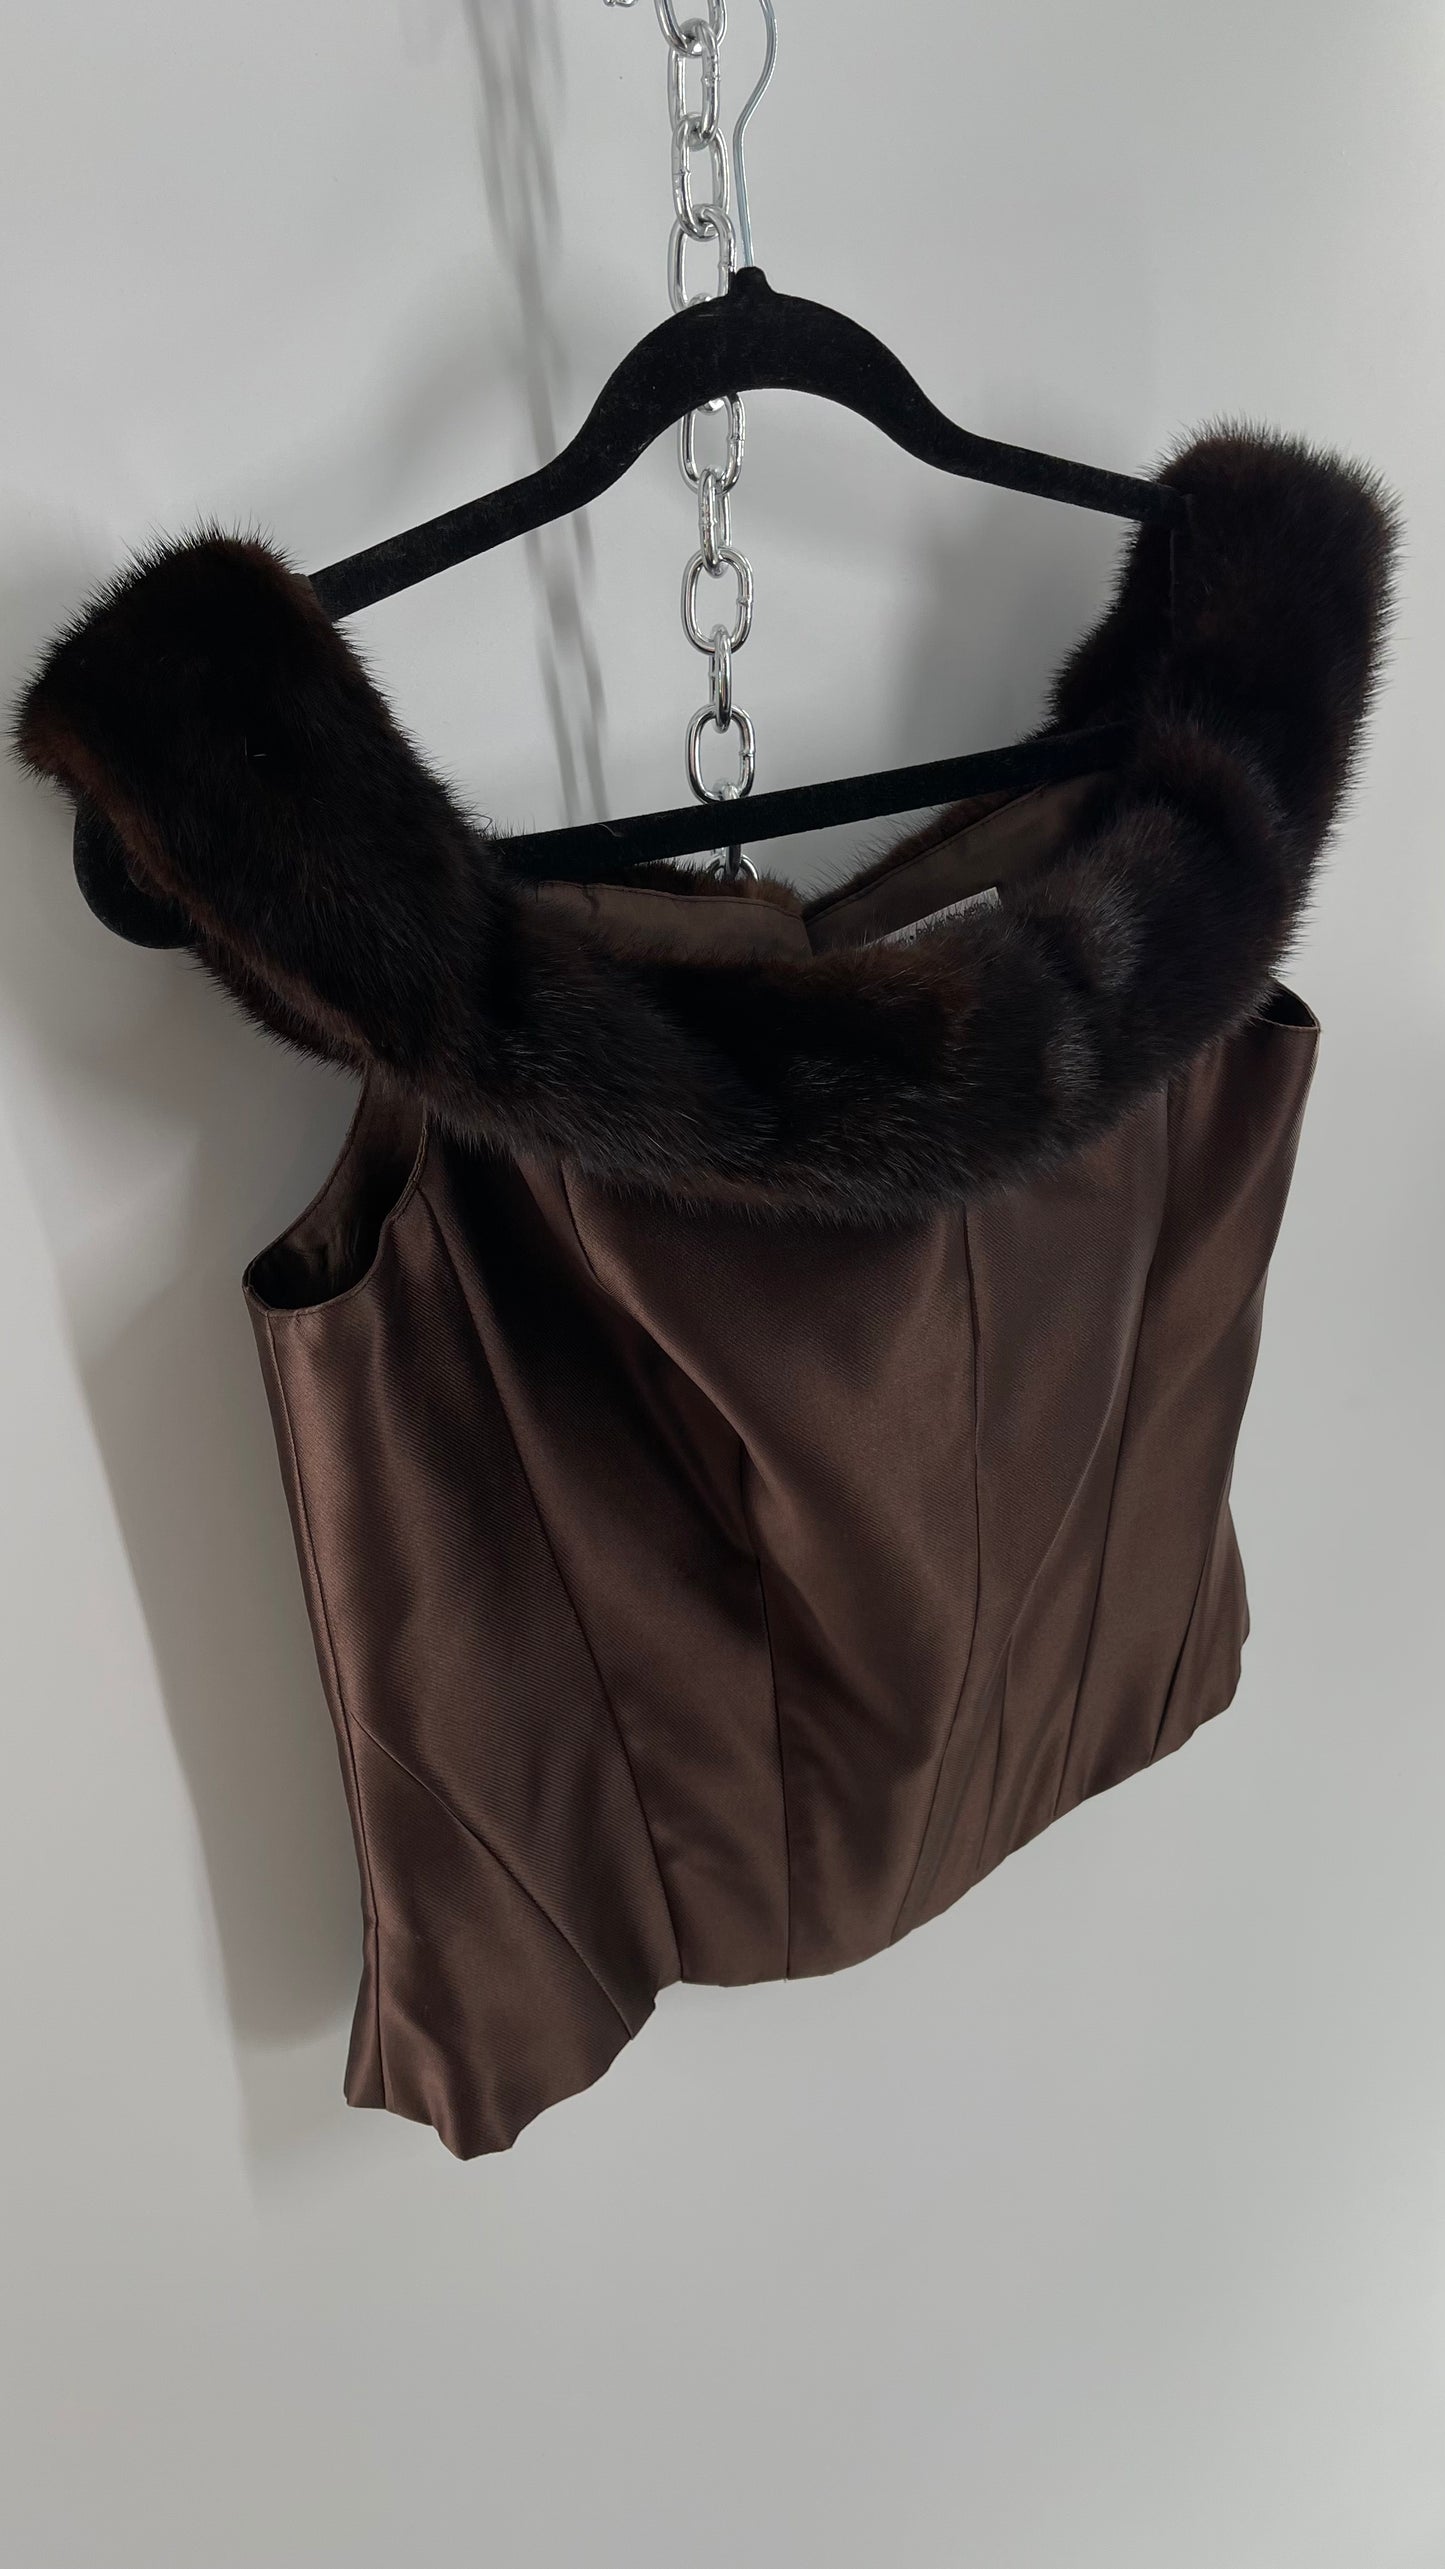 Vintage Sherrie Bloom • Peter Noviella• CHETTA B 100% Silk Brown Corset with Fur Trim Off the Shoulder Collar (14)